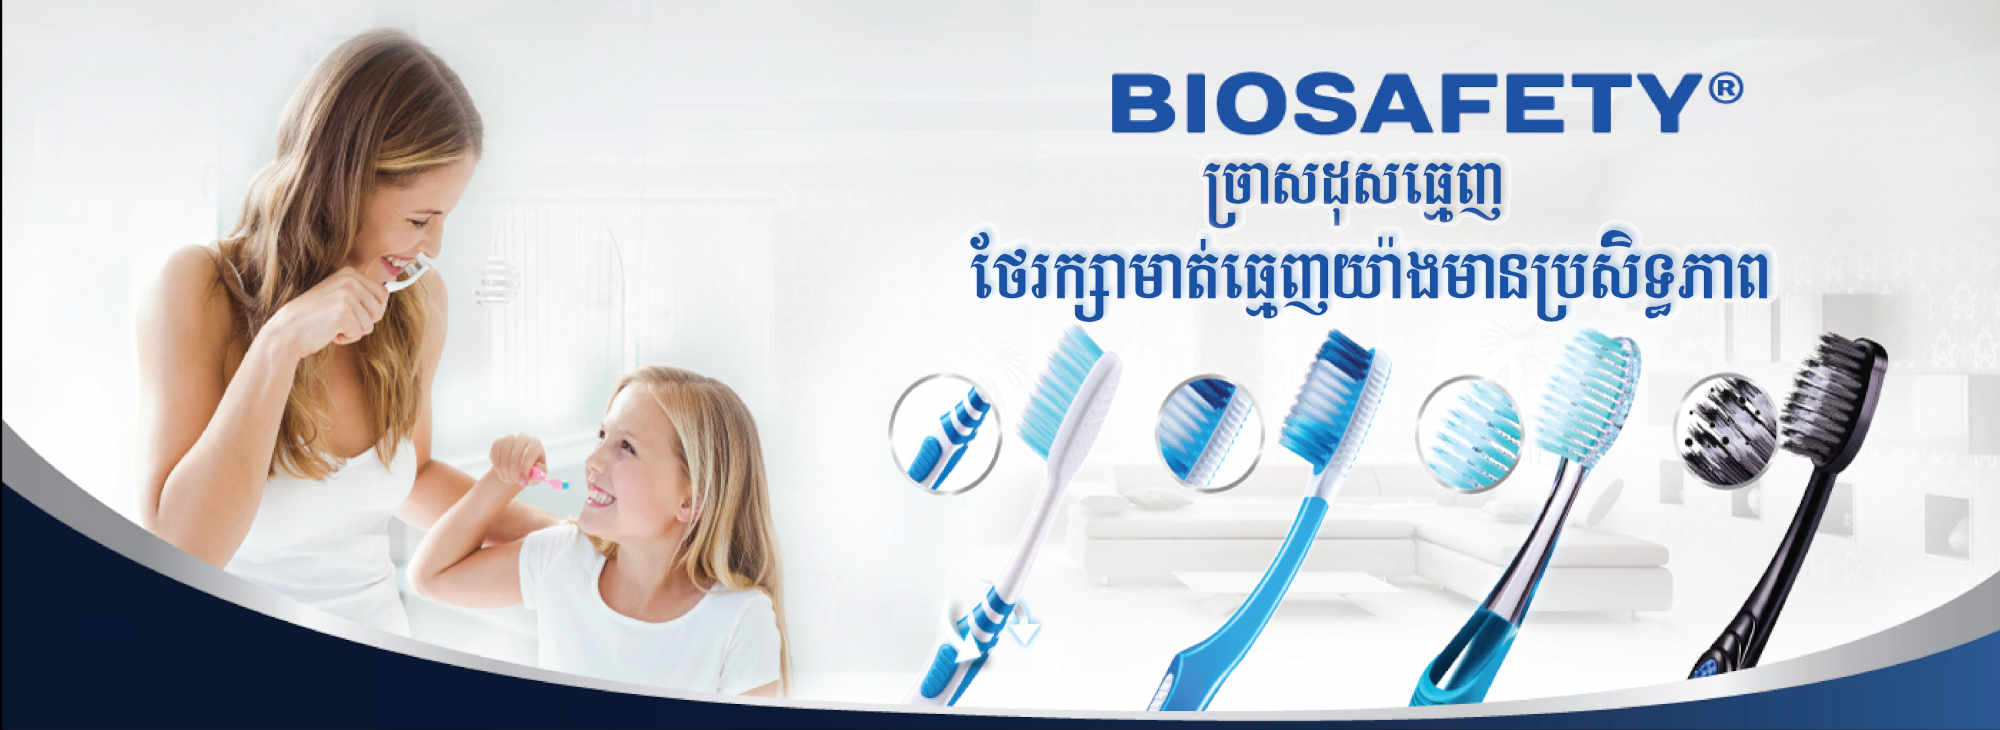 Biosafety Products